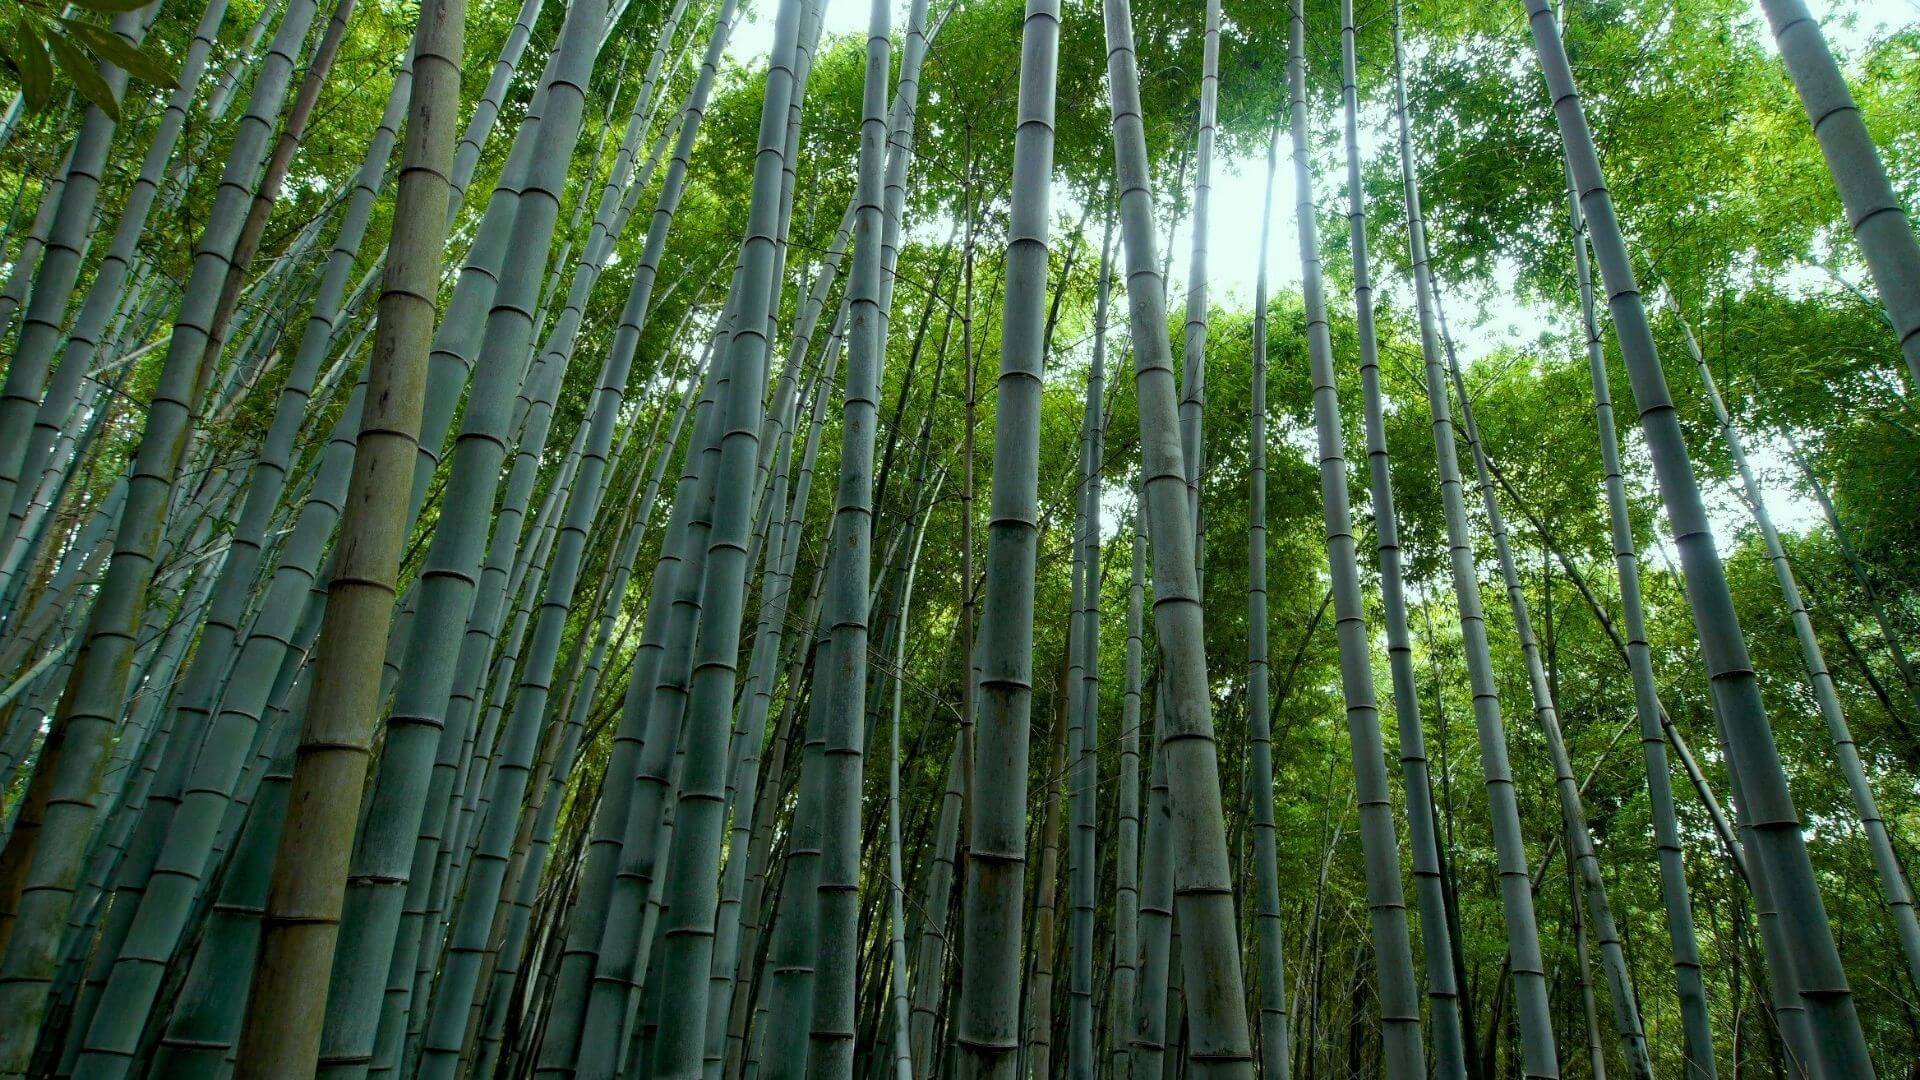 Why Choose Bamboo Sticks, Blog